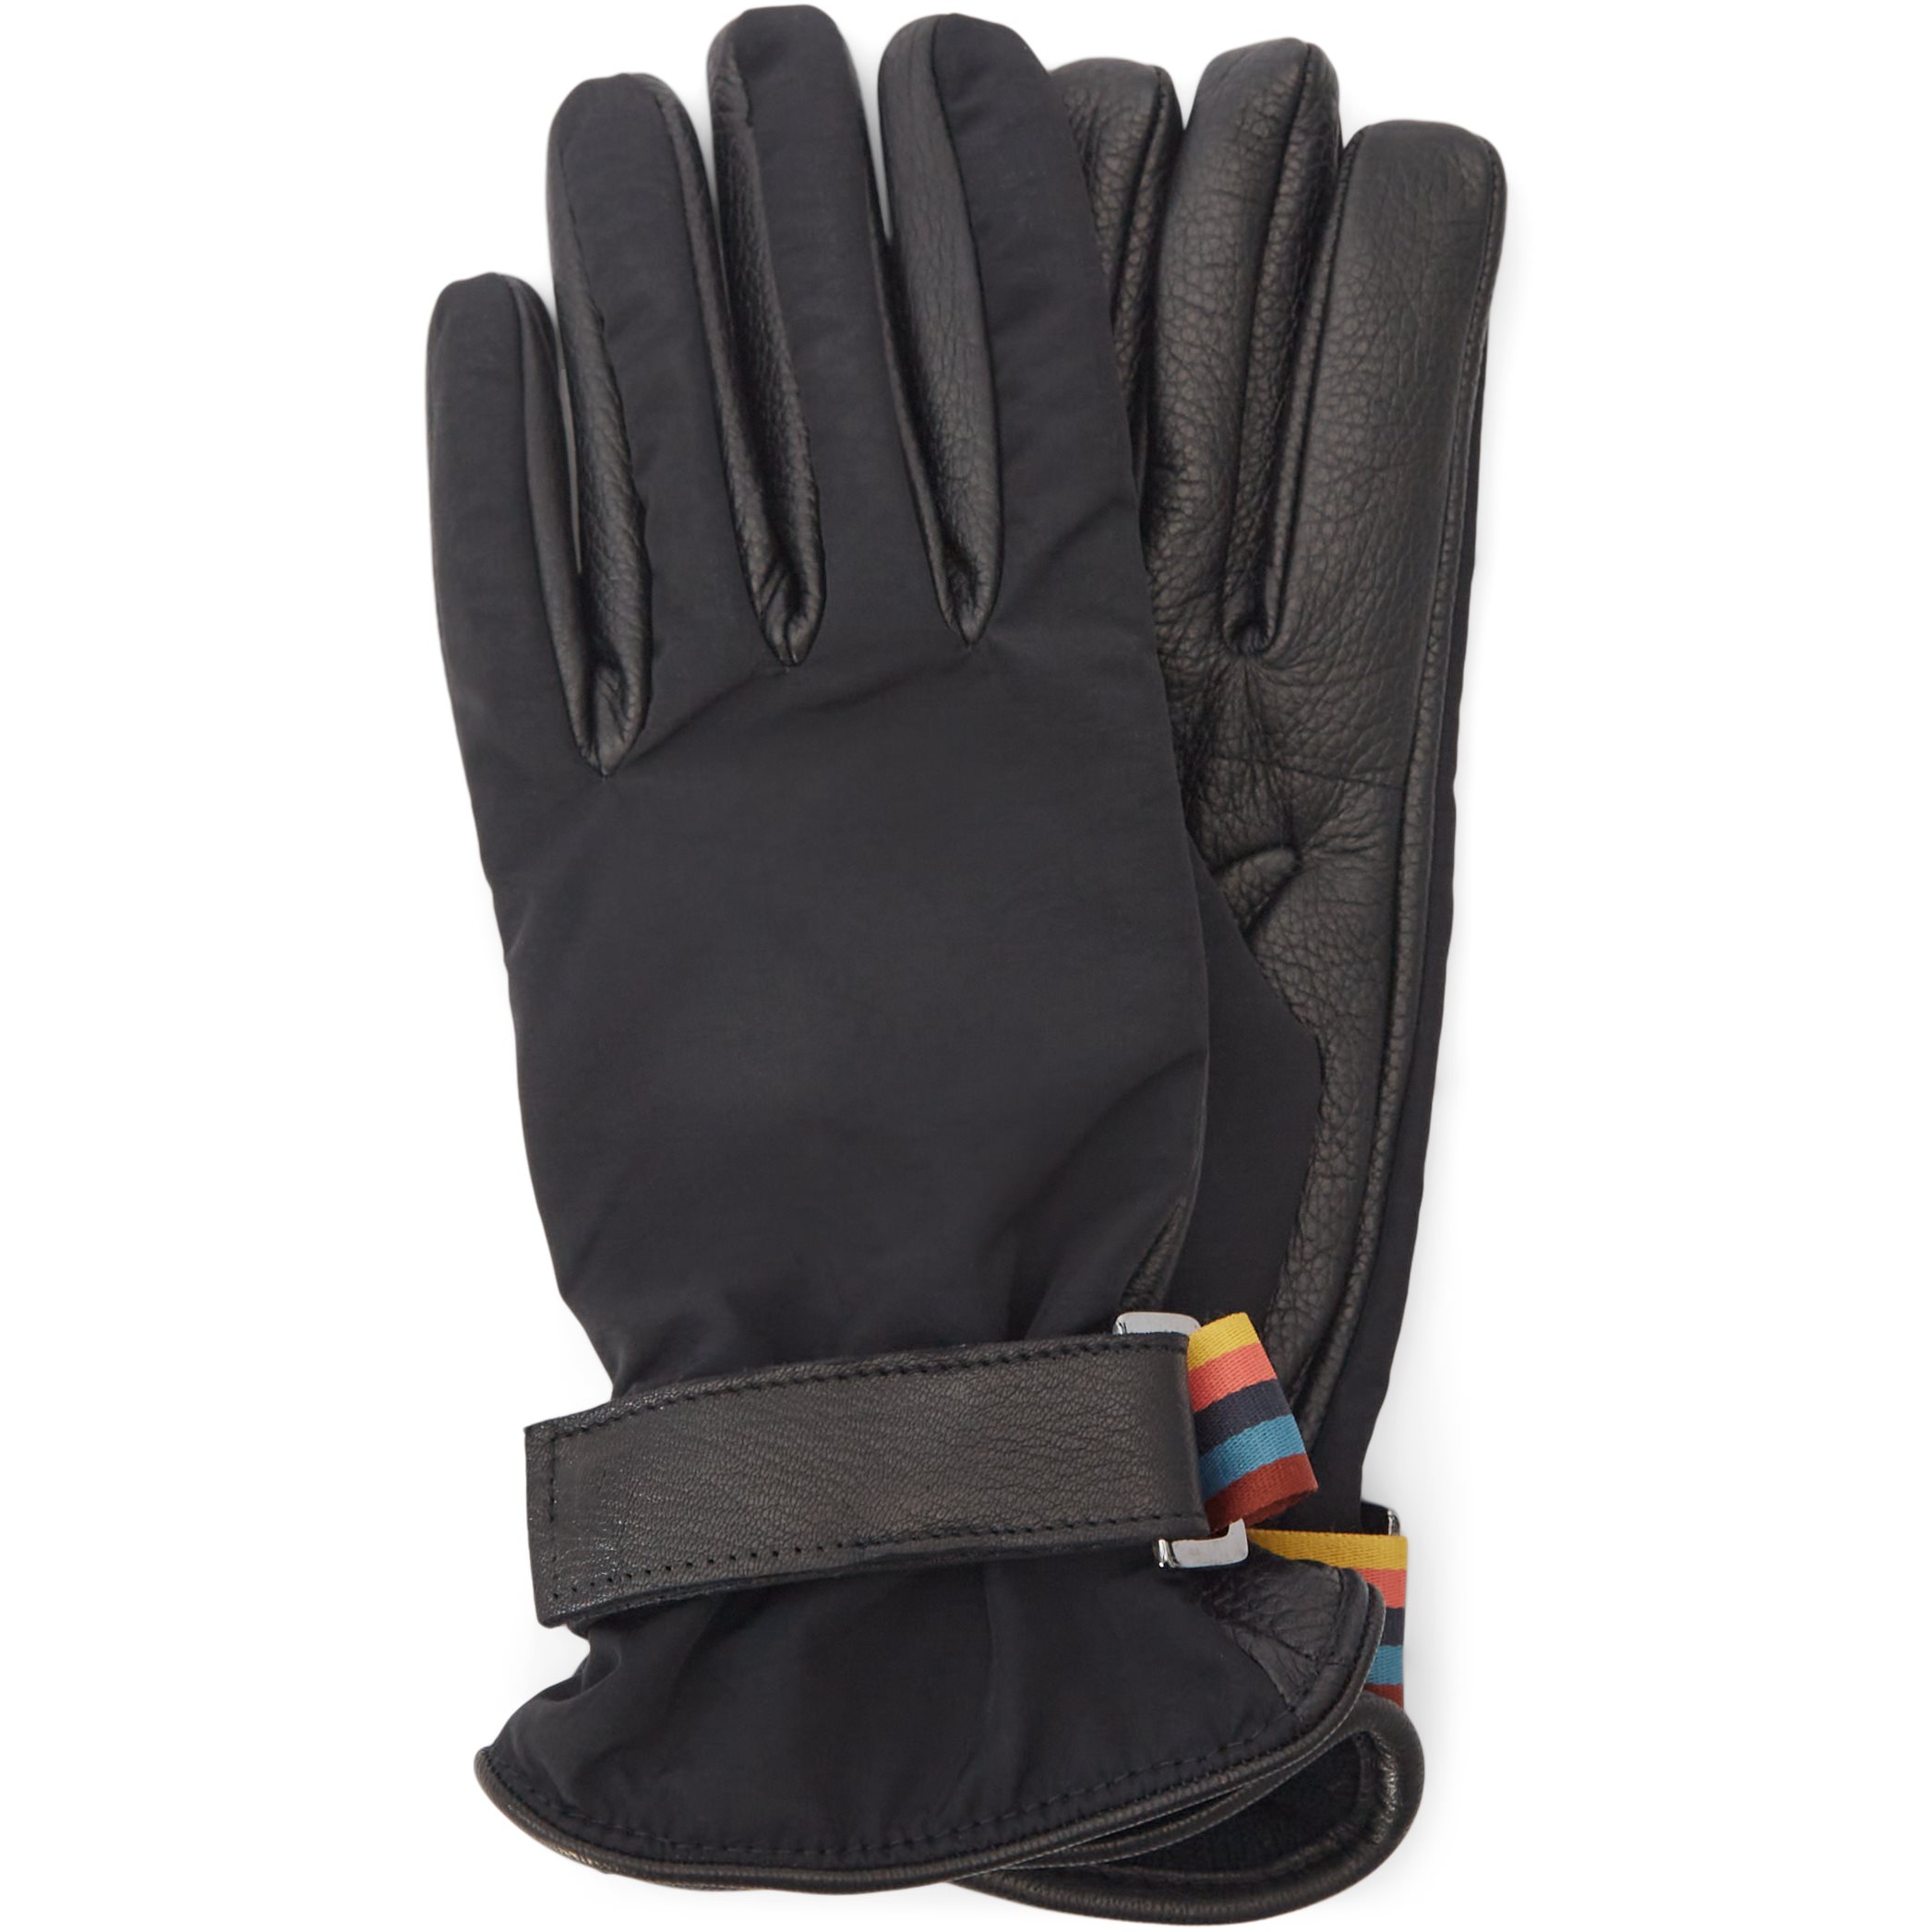 Paul Smith Accessories Gloves 900F GG980 Black